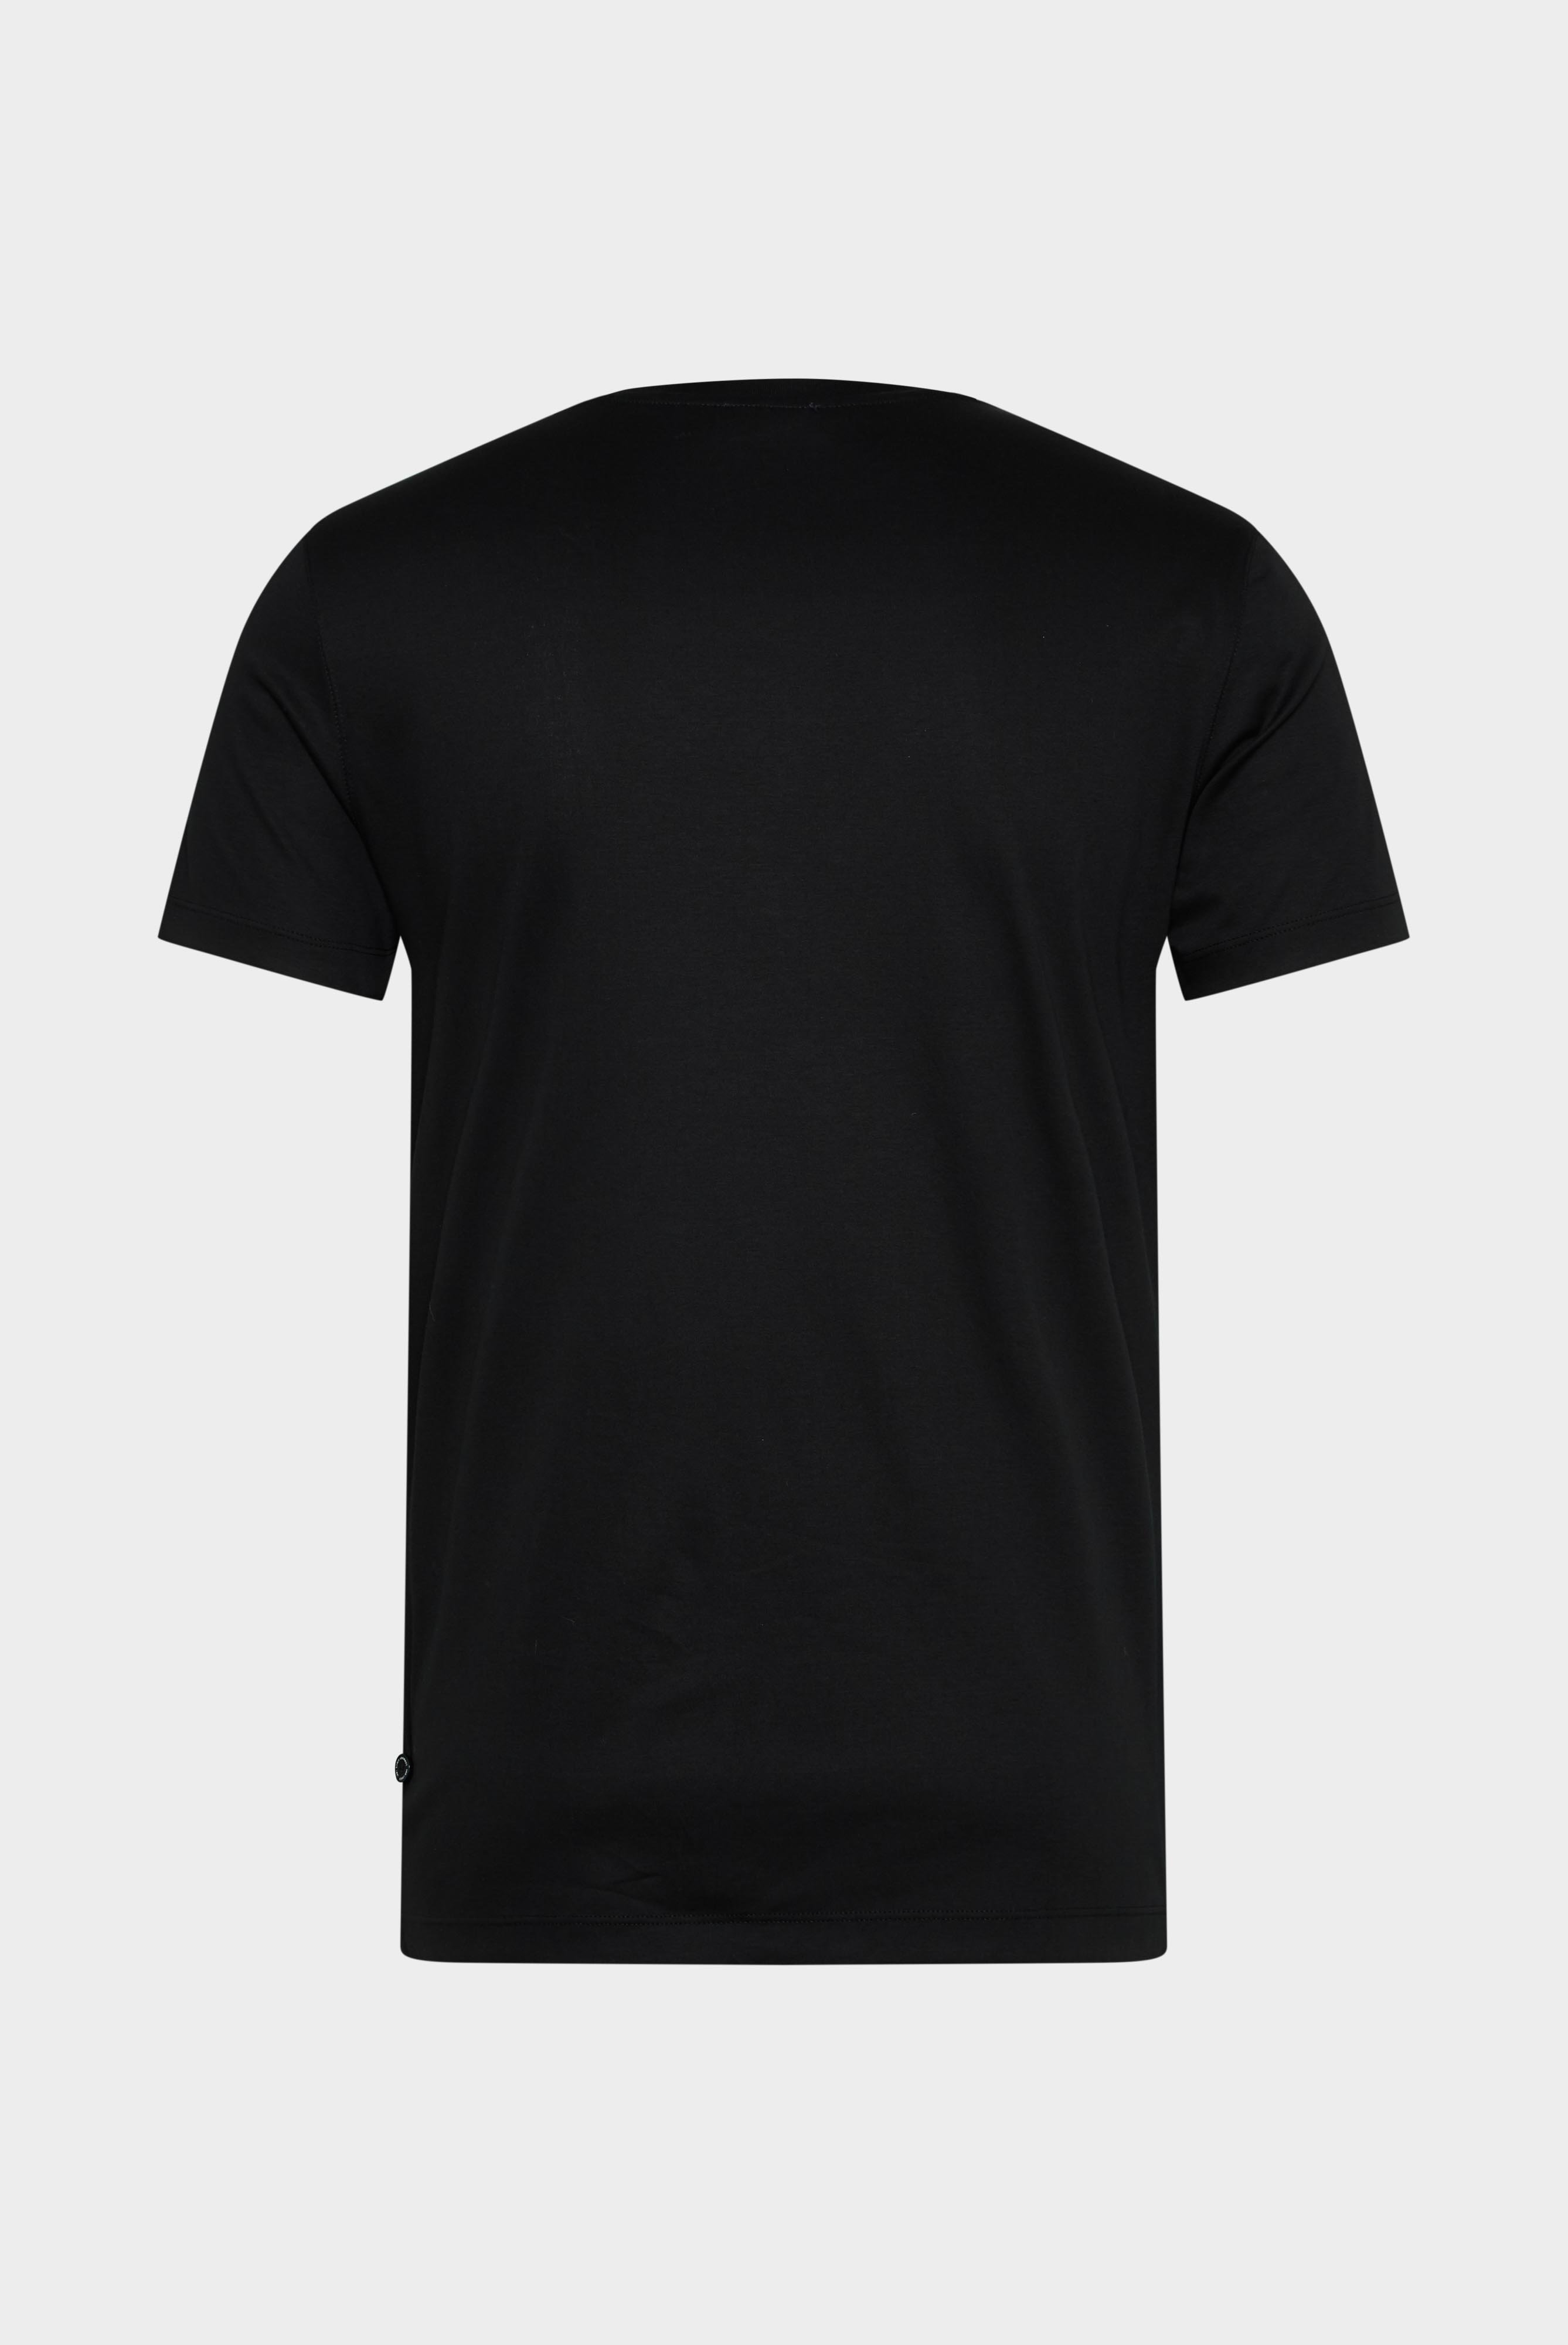 T-Shirts+Swiss Cotton Jersey V-Neck T-Shirt+20.1715.UX.180031.099.S